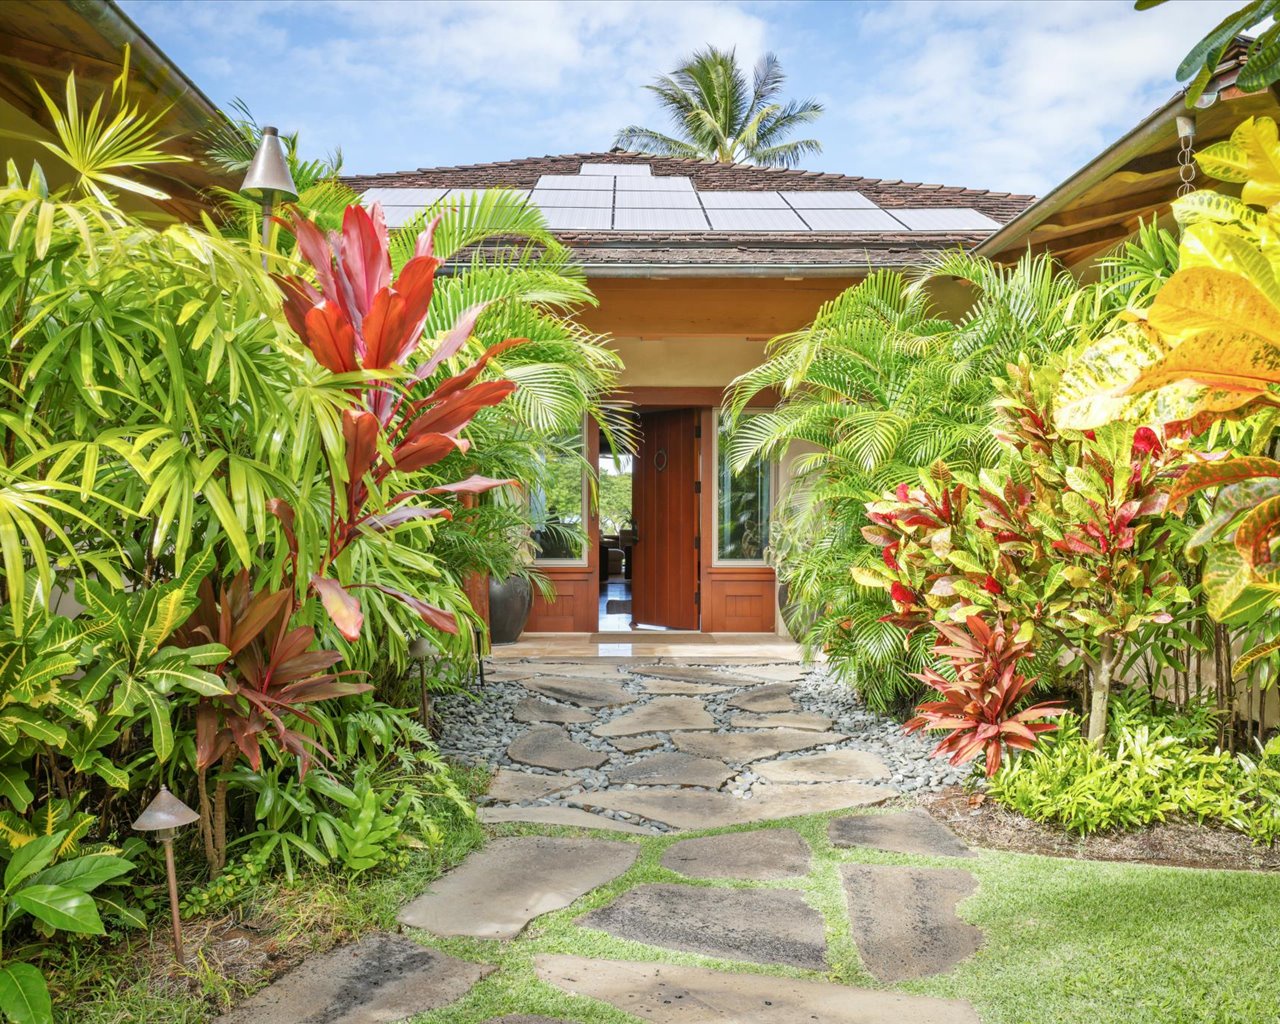 Kailua Kona Vacation Rentals, 3BD Pakui Street (131) Estate Home at Four Seasons Resort at Hualalai - Front entrance guided by lush & tropical surroundings